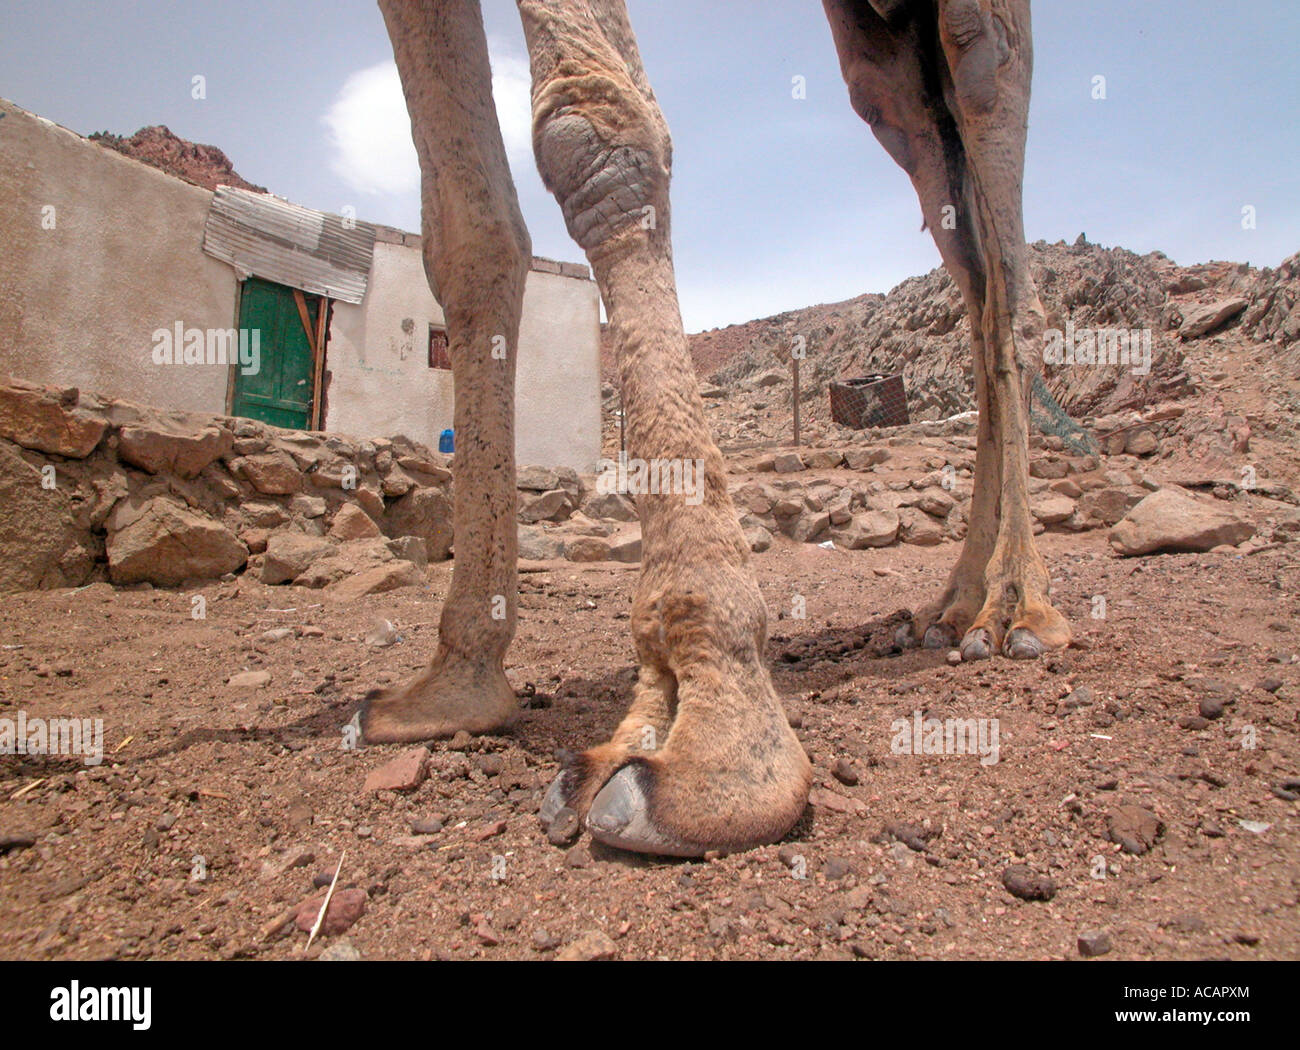 Feet of a camel Dahab, Sinai, Egypt Stock Photo